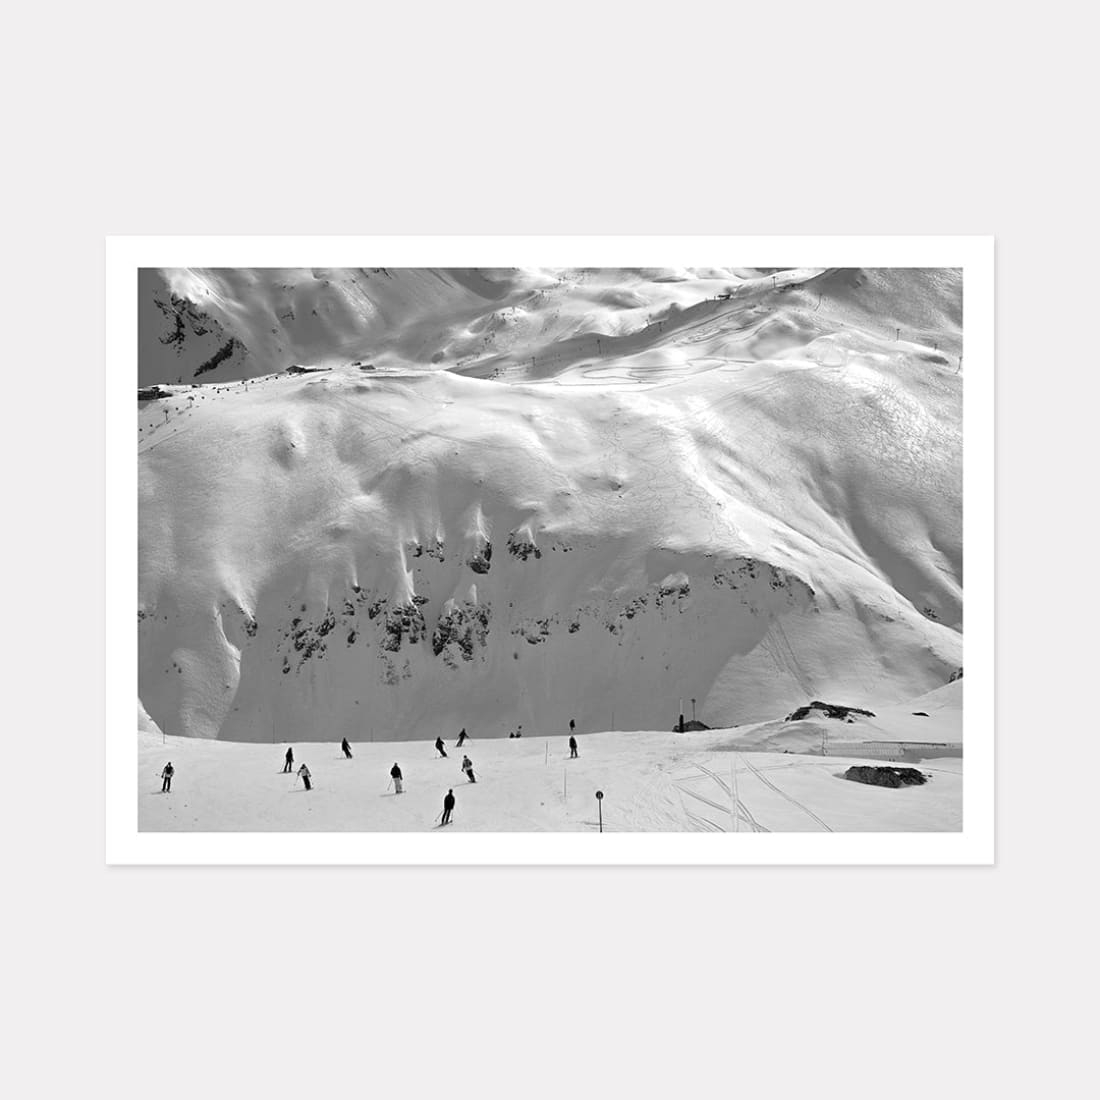 Spring Ski Art Print, A2 (59.4cm x 42cm) unframed print – Powderhound